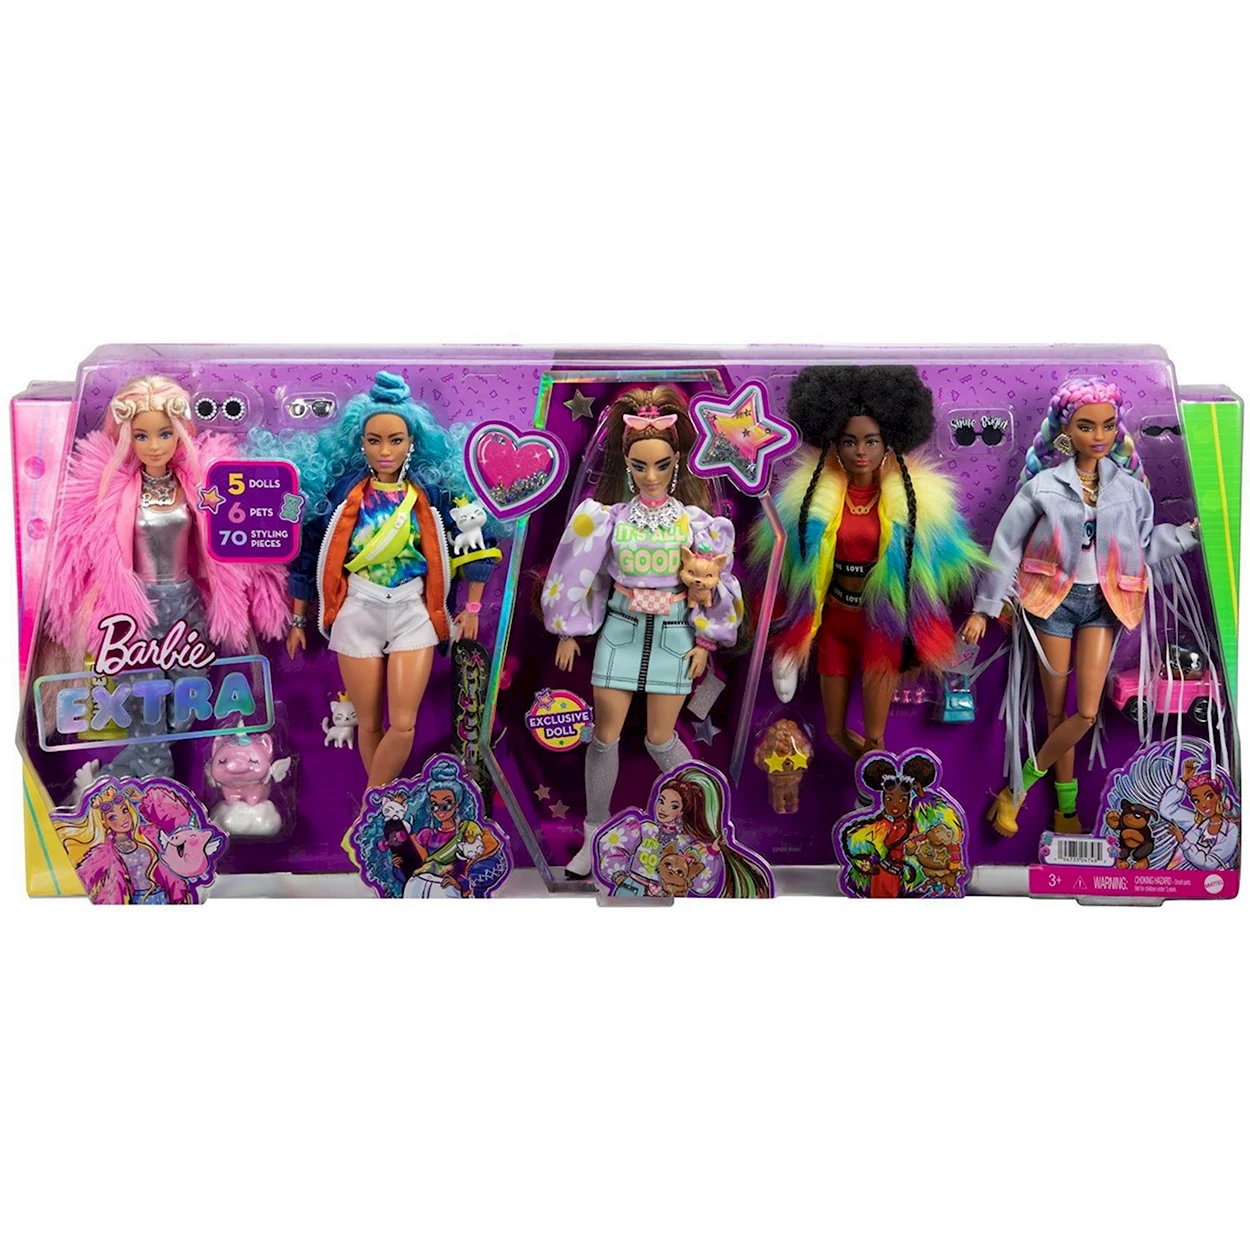 Barbie Extra набор из 5 кукол. Игрушка